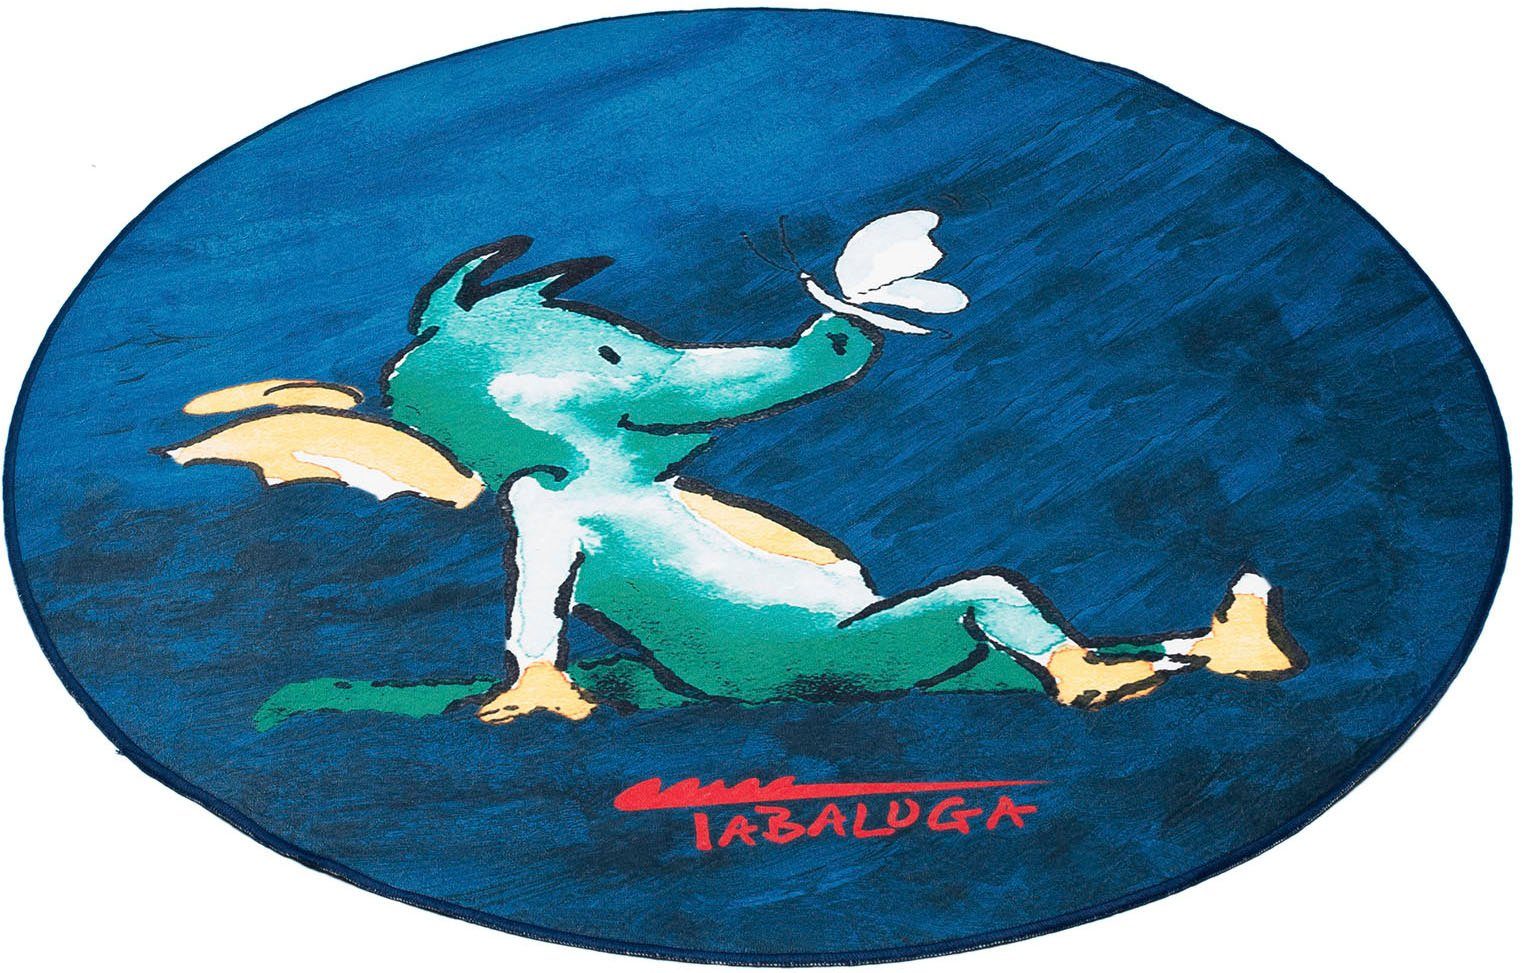 Kinderteppich Drache Tabaluga dunkelblau, 4 rund, mm, Höhe: waschbar, bedruckt, TABALUGA, Kinderzimmer